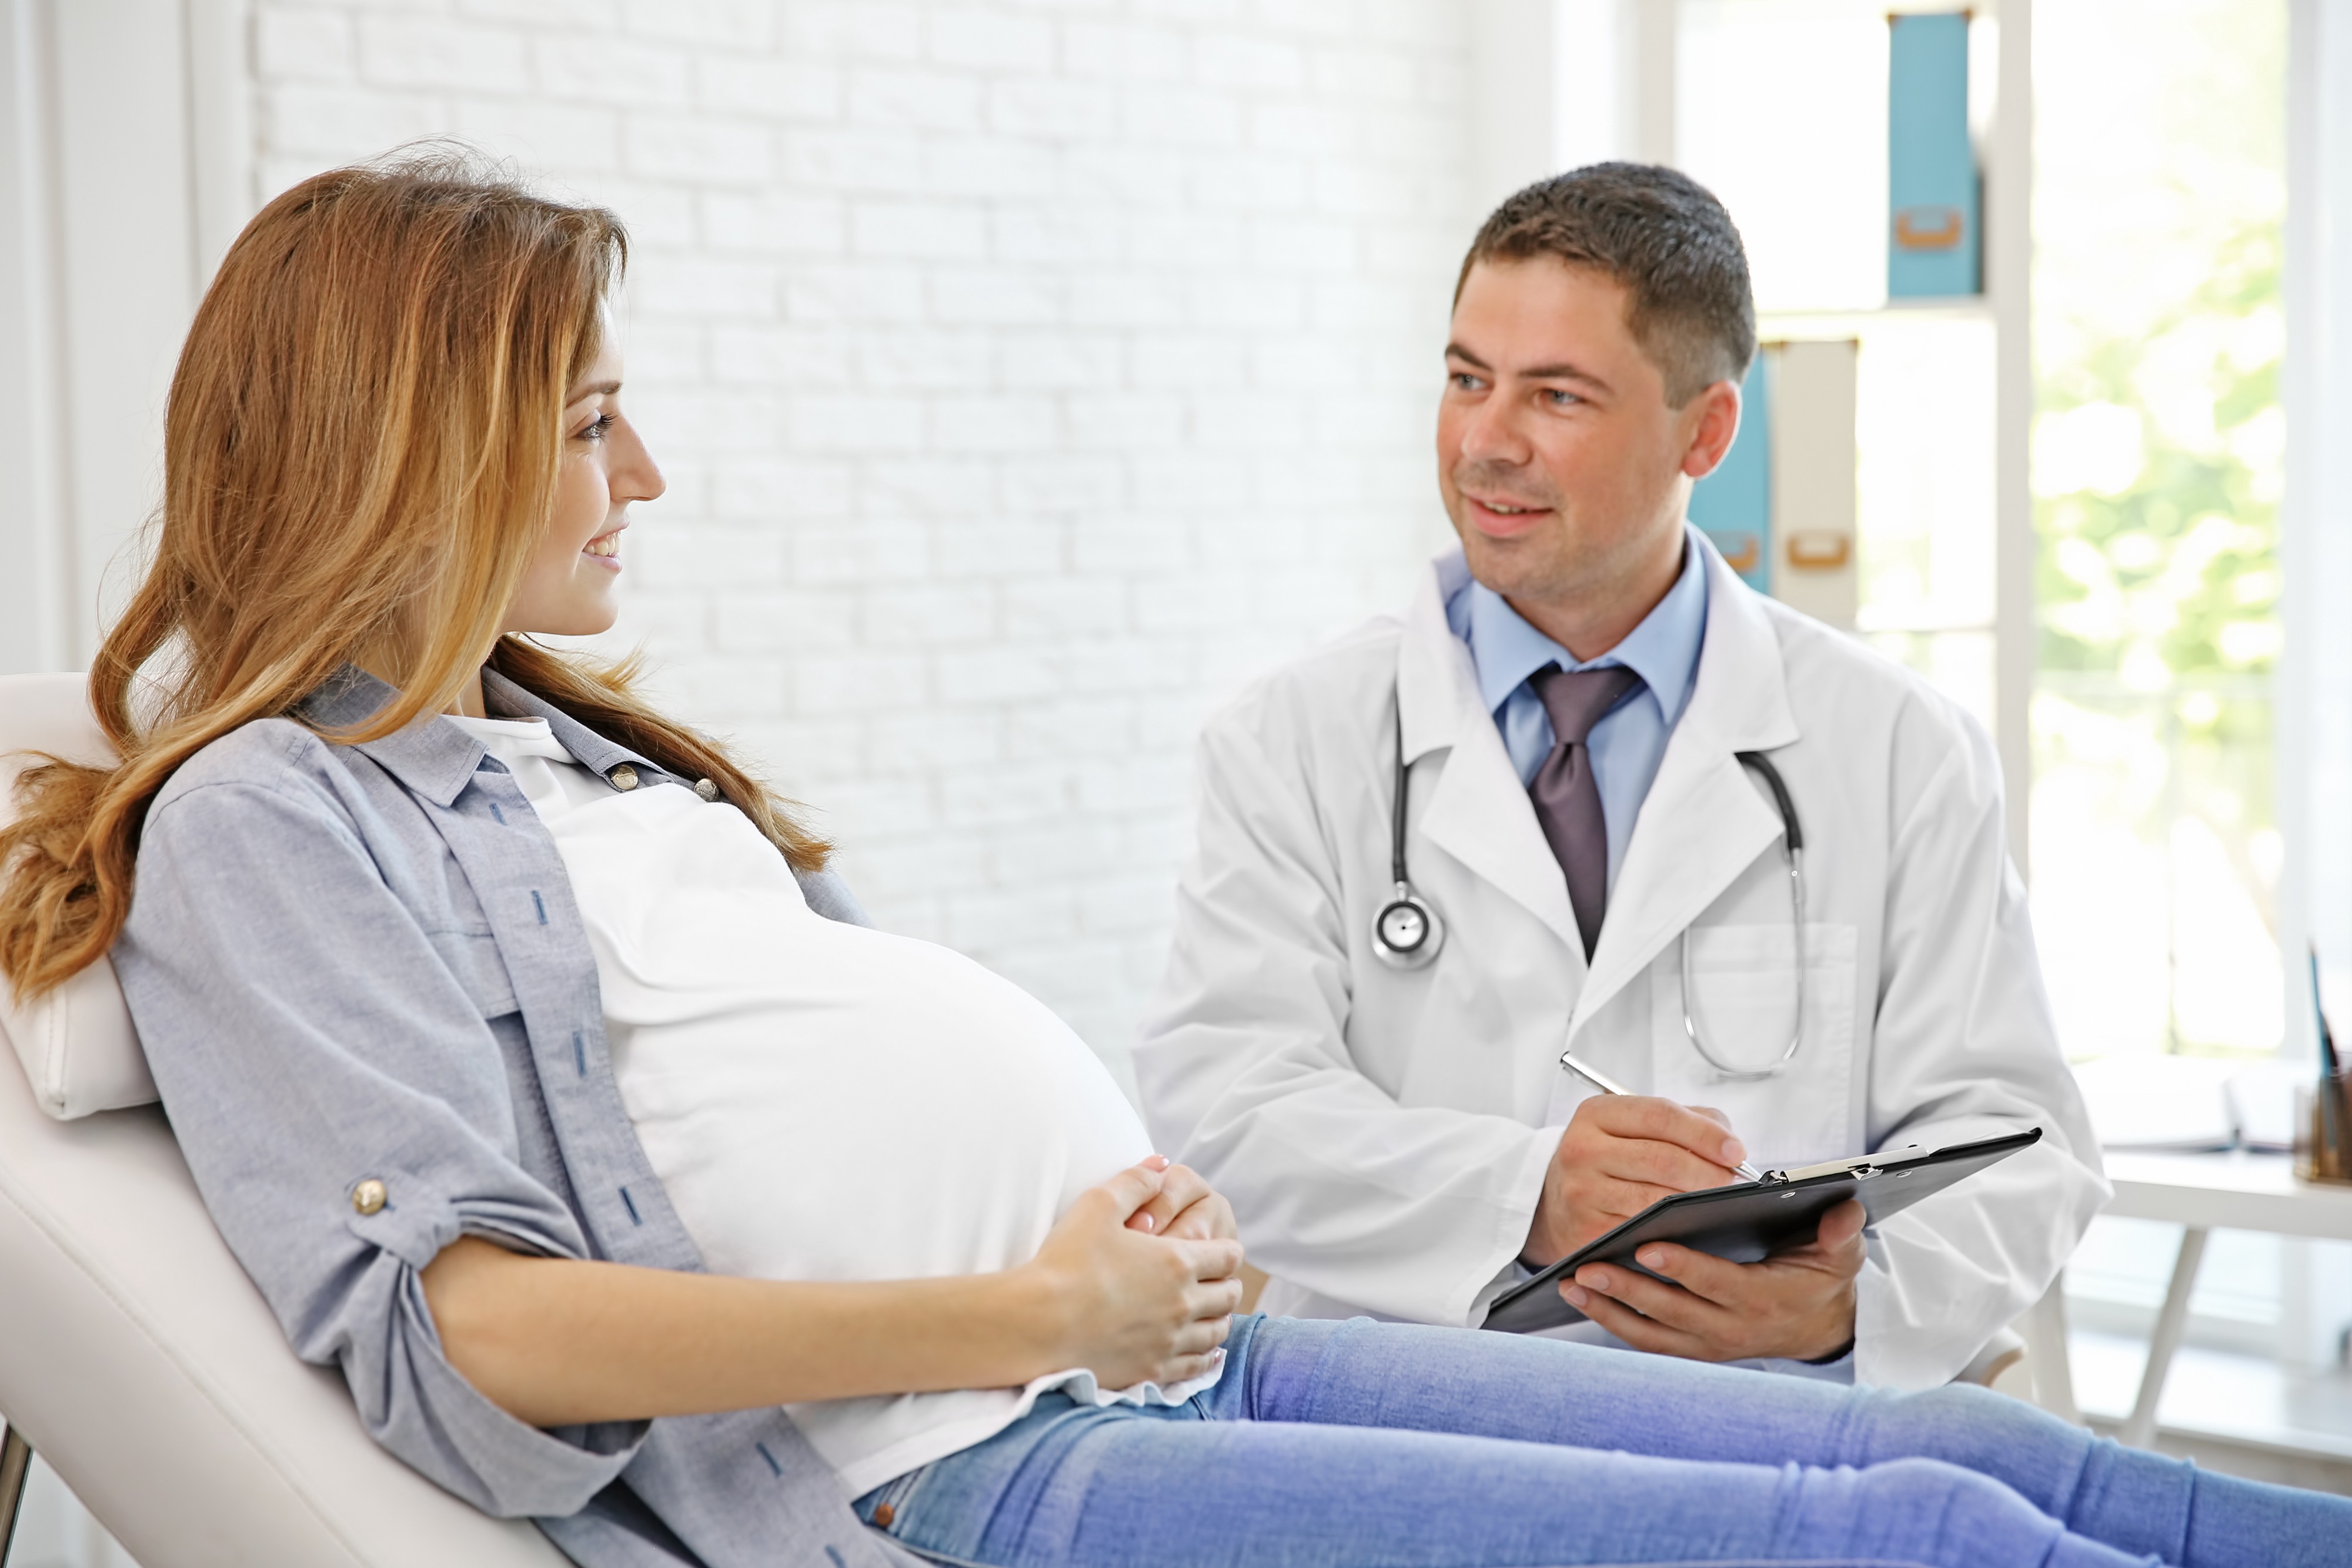 Pregnant patient at OBGYN visit 